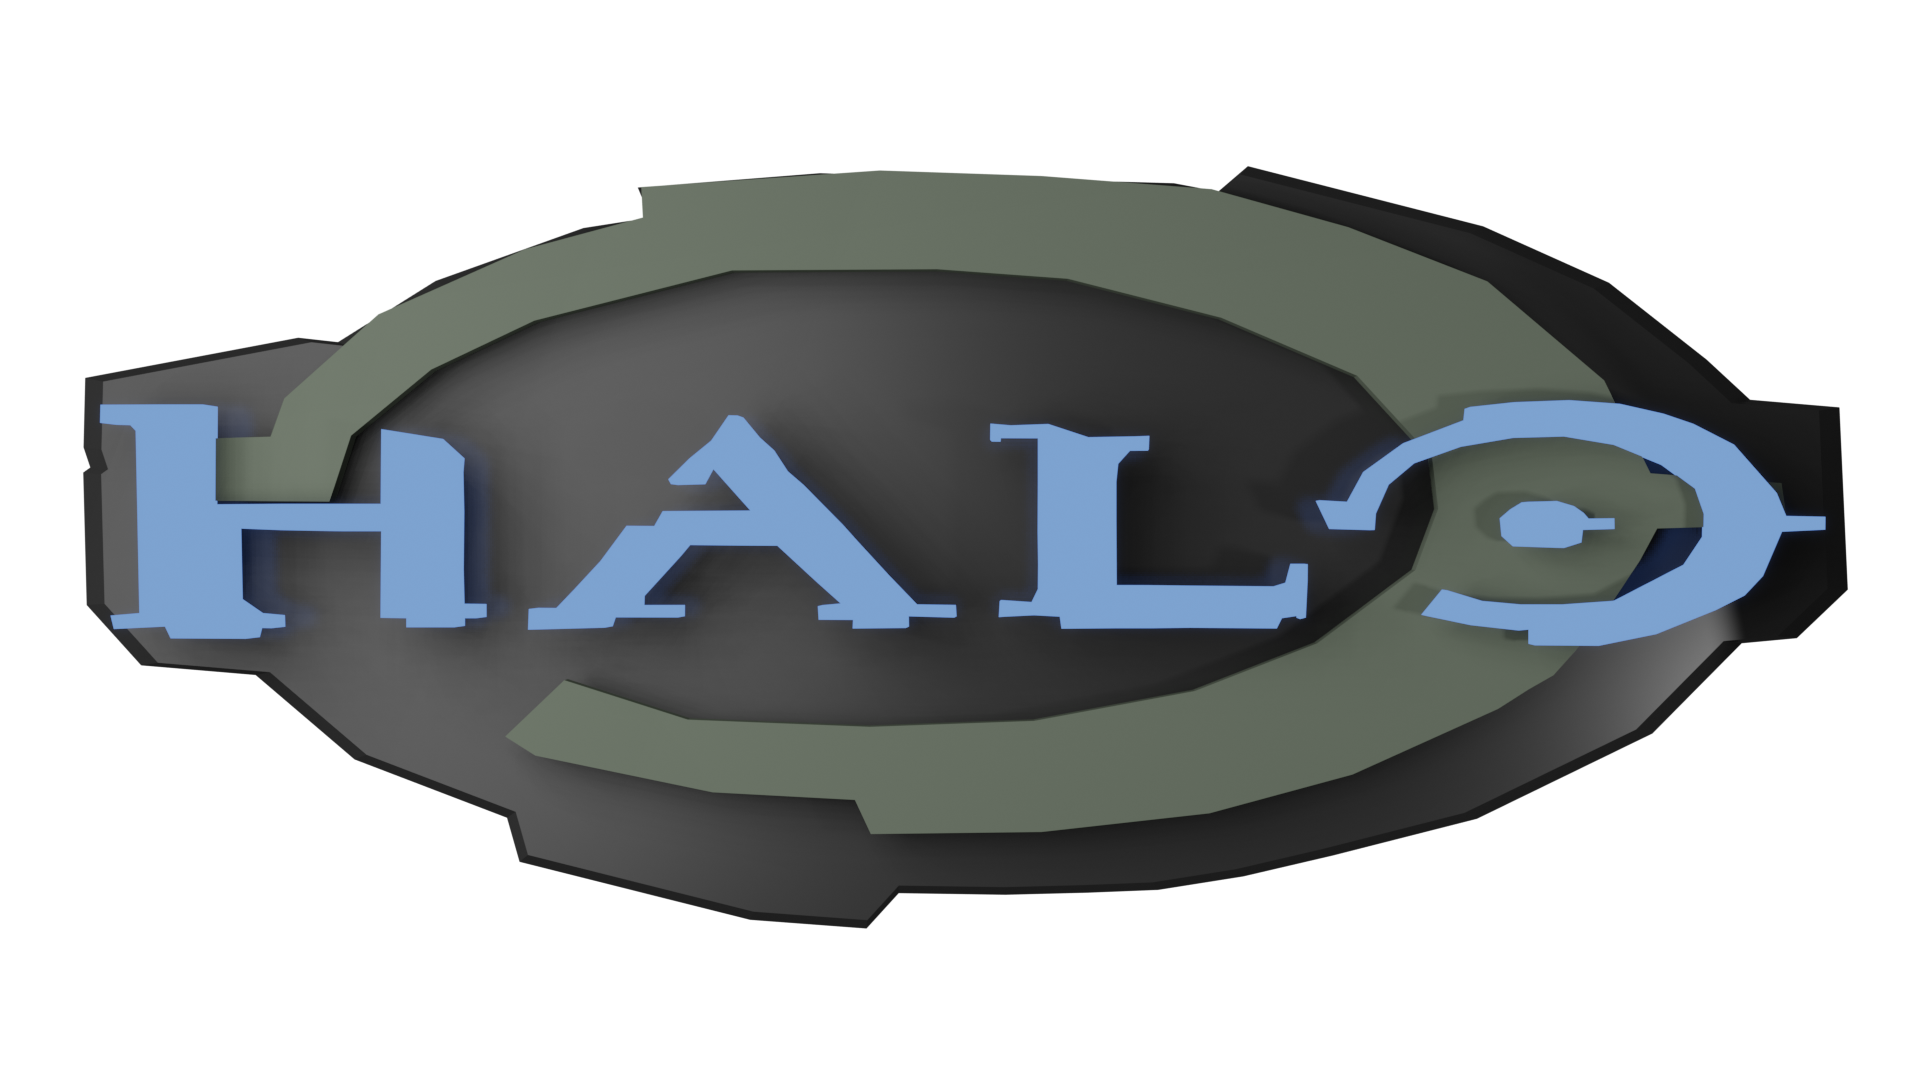 Halo Logo PNG Image File